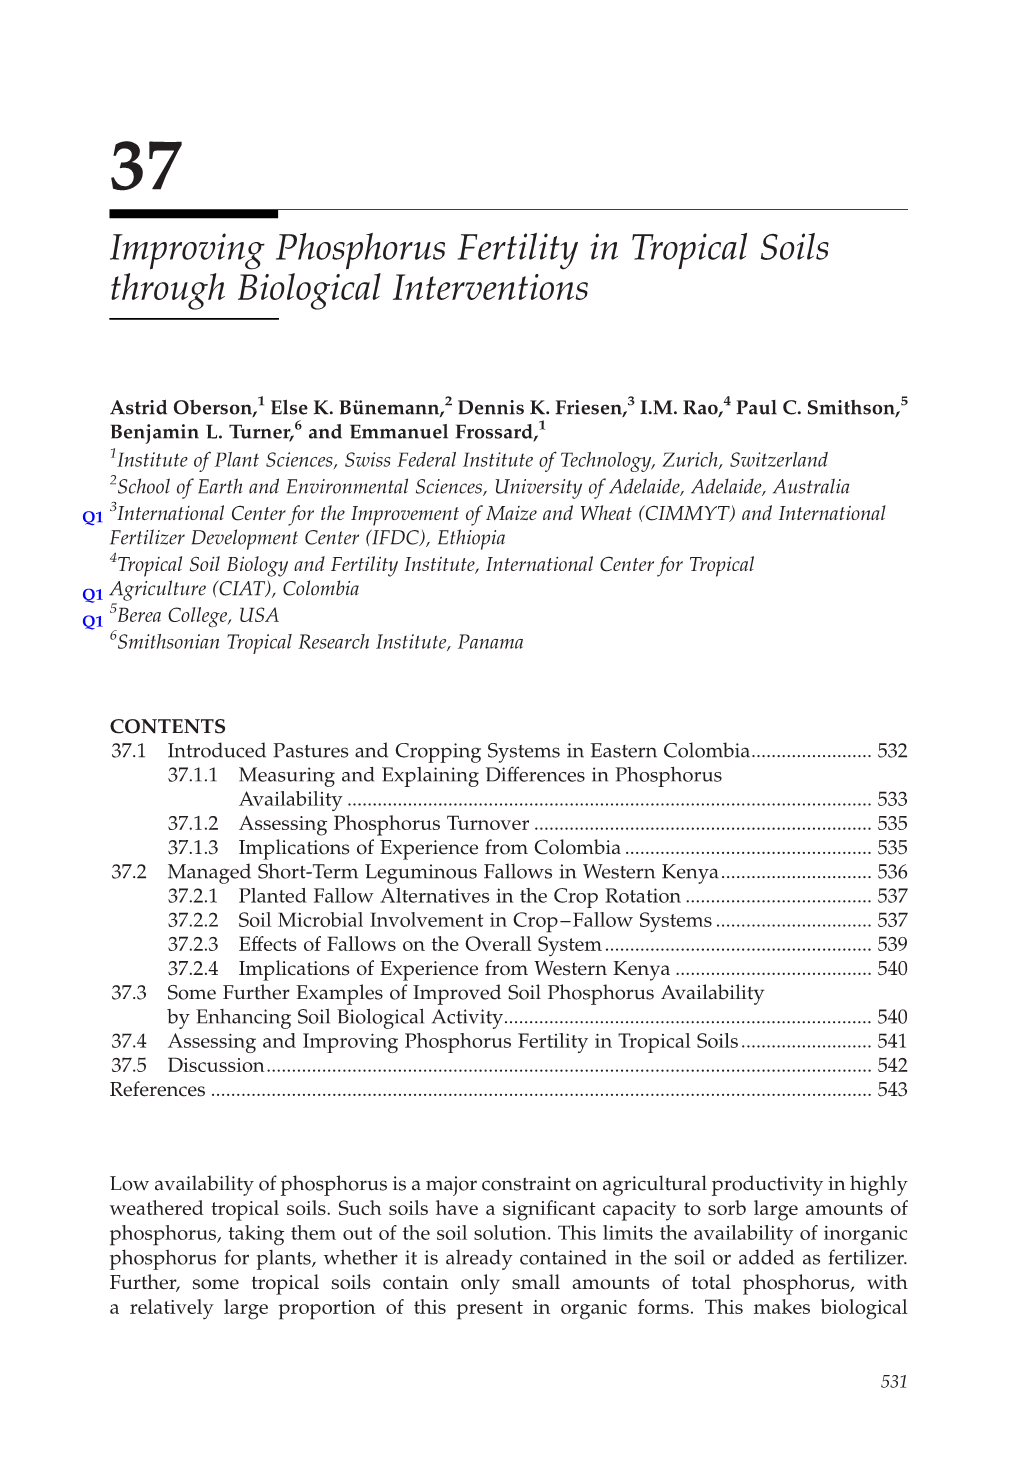 Improving Phosphorus Fertility in Tropical Soils Through Biological Interventions